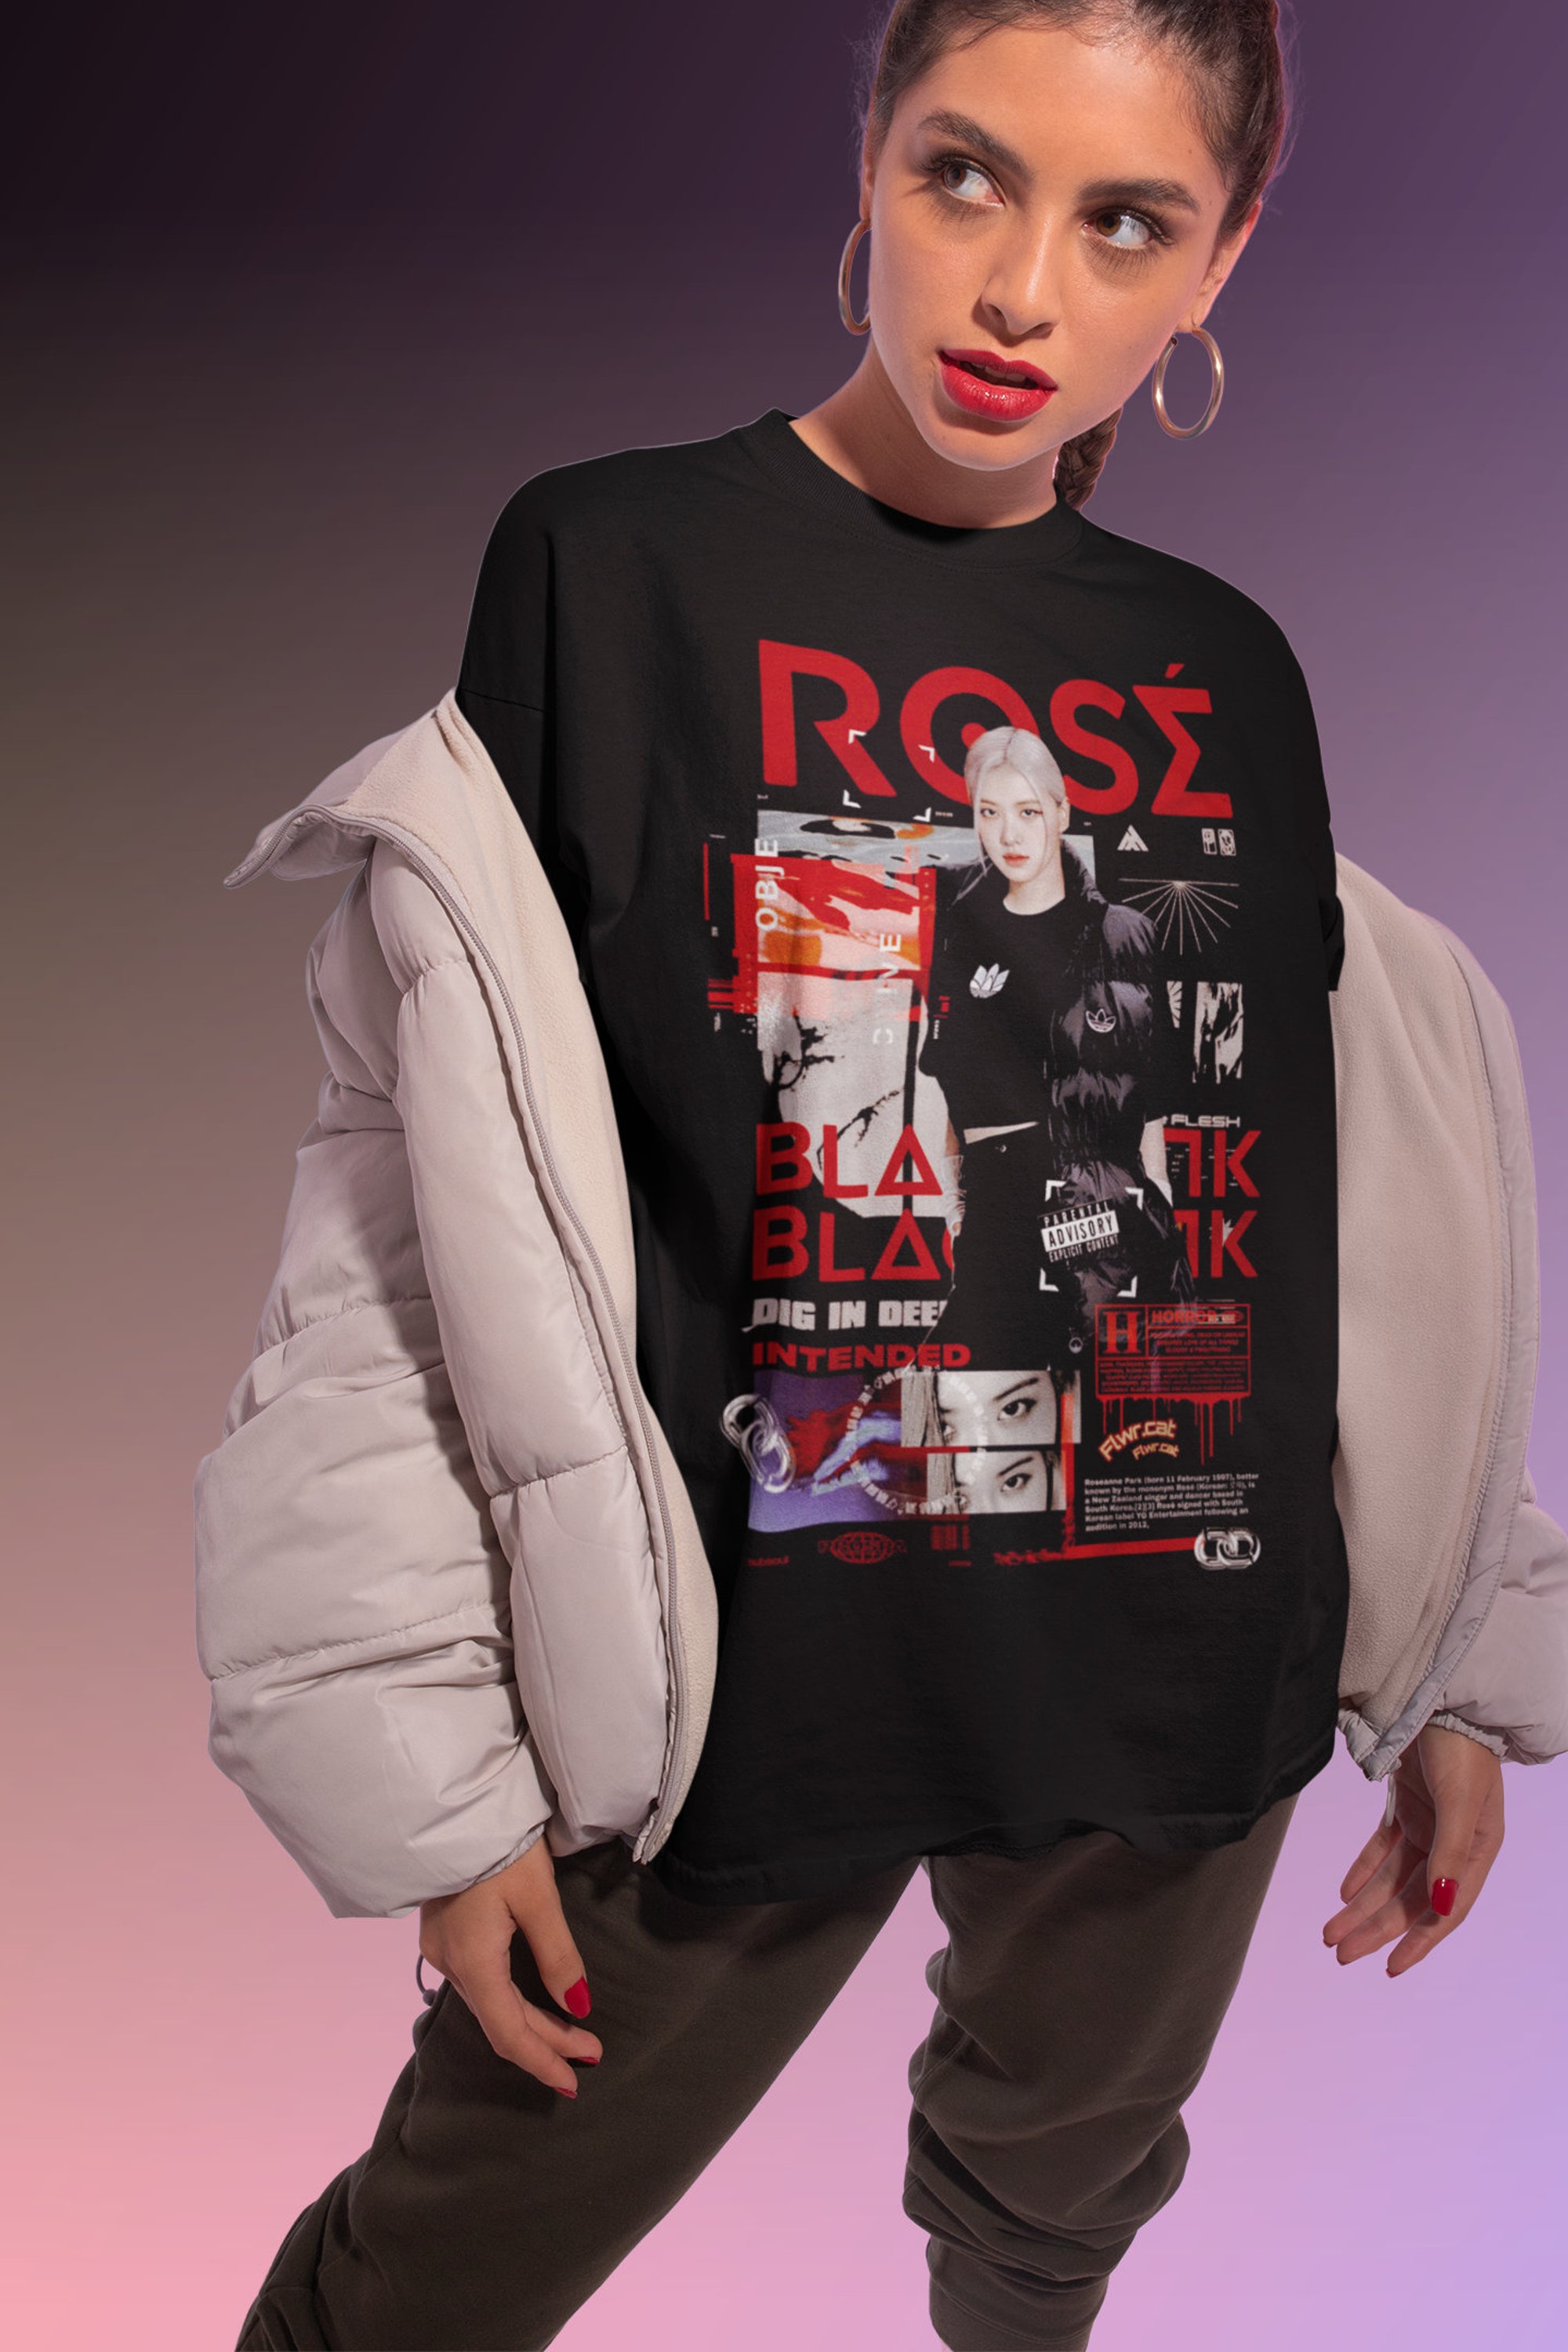 Discover Maglietta T-Shirt BlackPink Uomo Donna Bambini - Rose Regalo Kpop